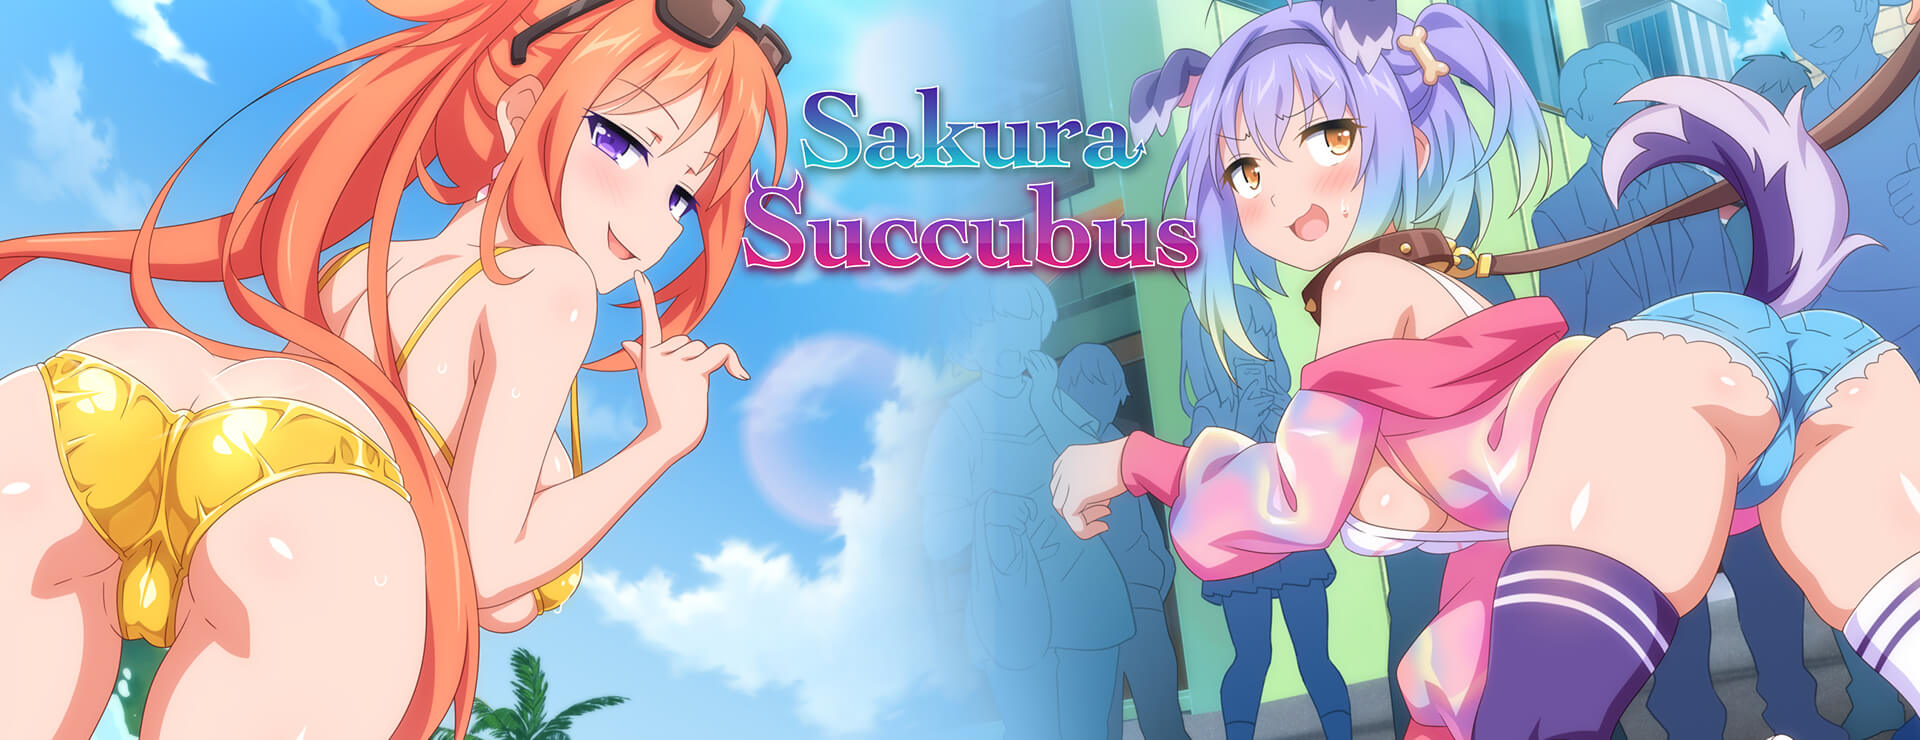 Sakura Succubus - Roman Visuel Jeu